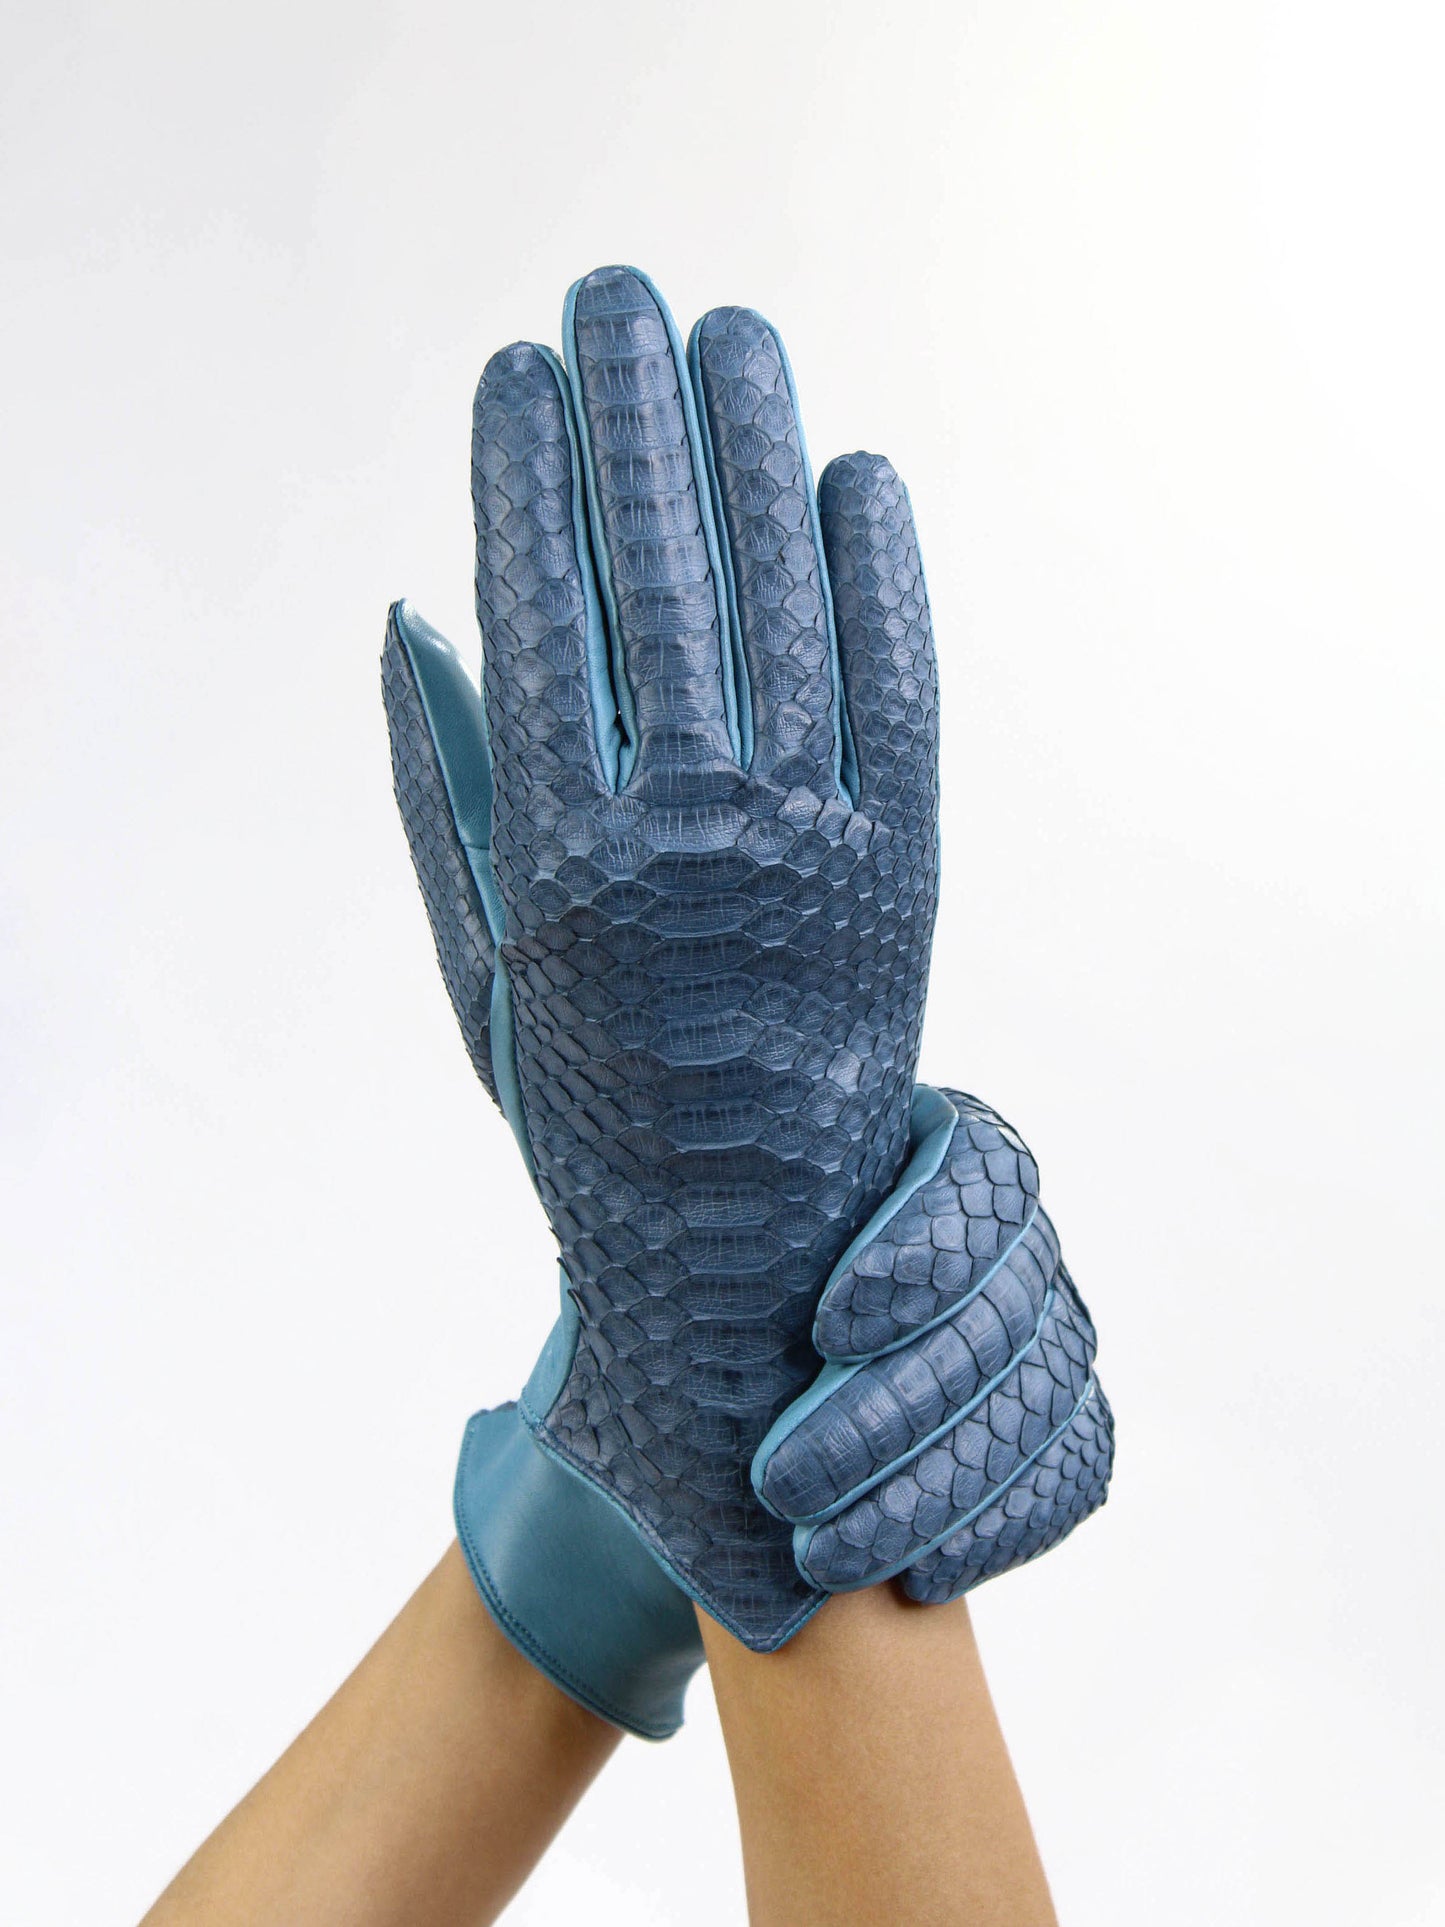 Blue python gloves